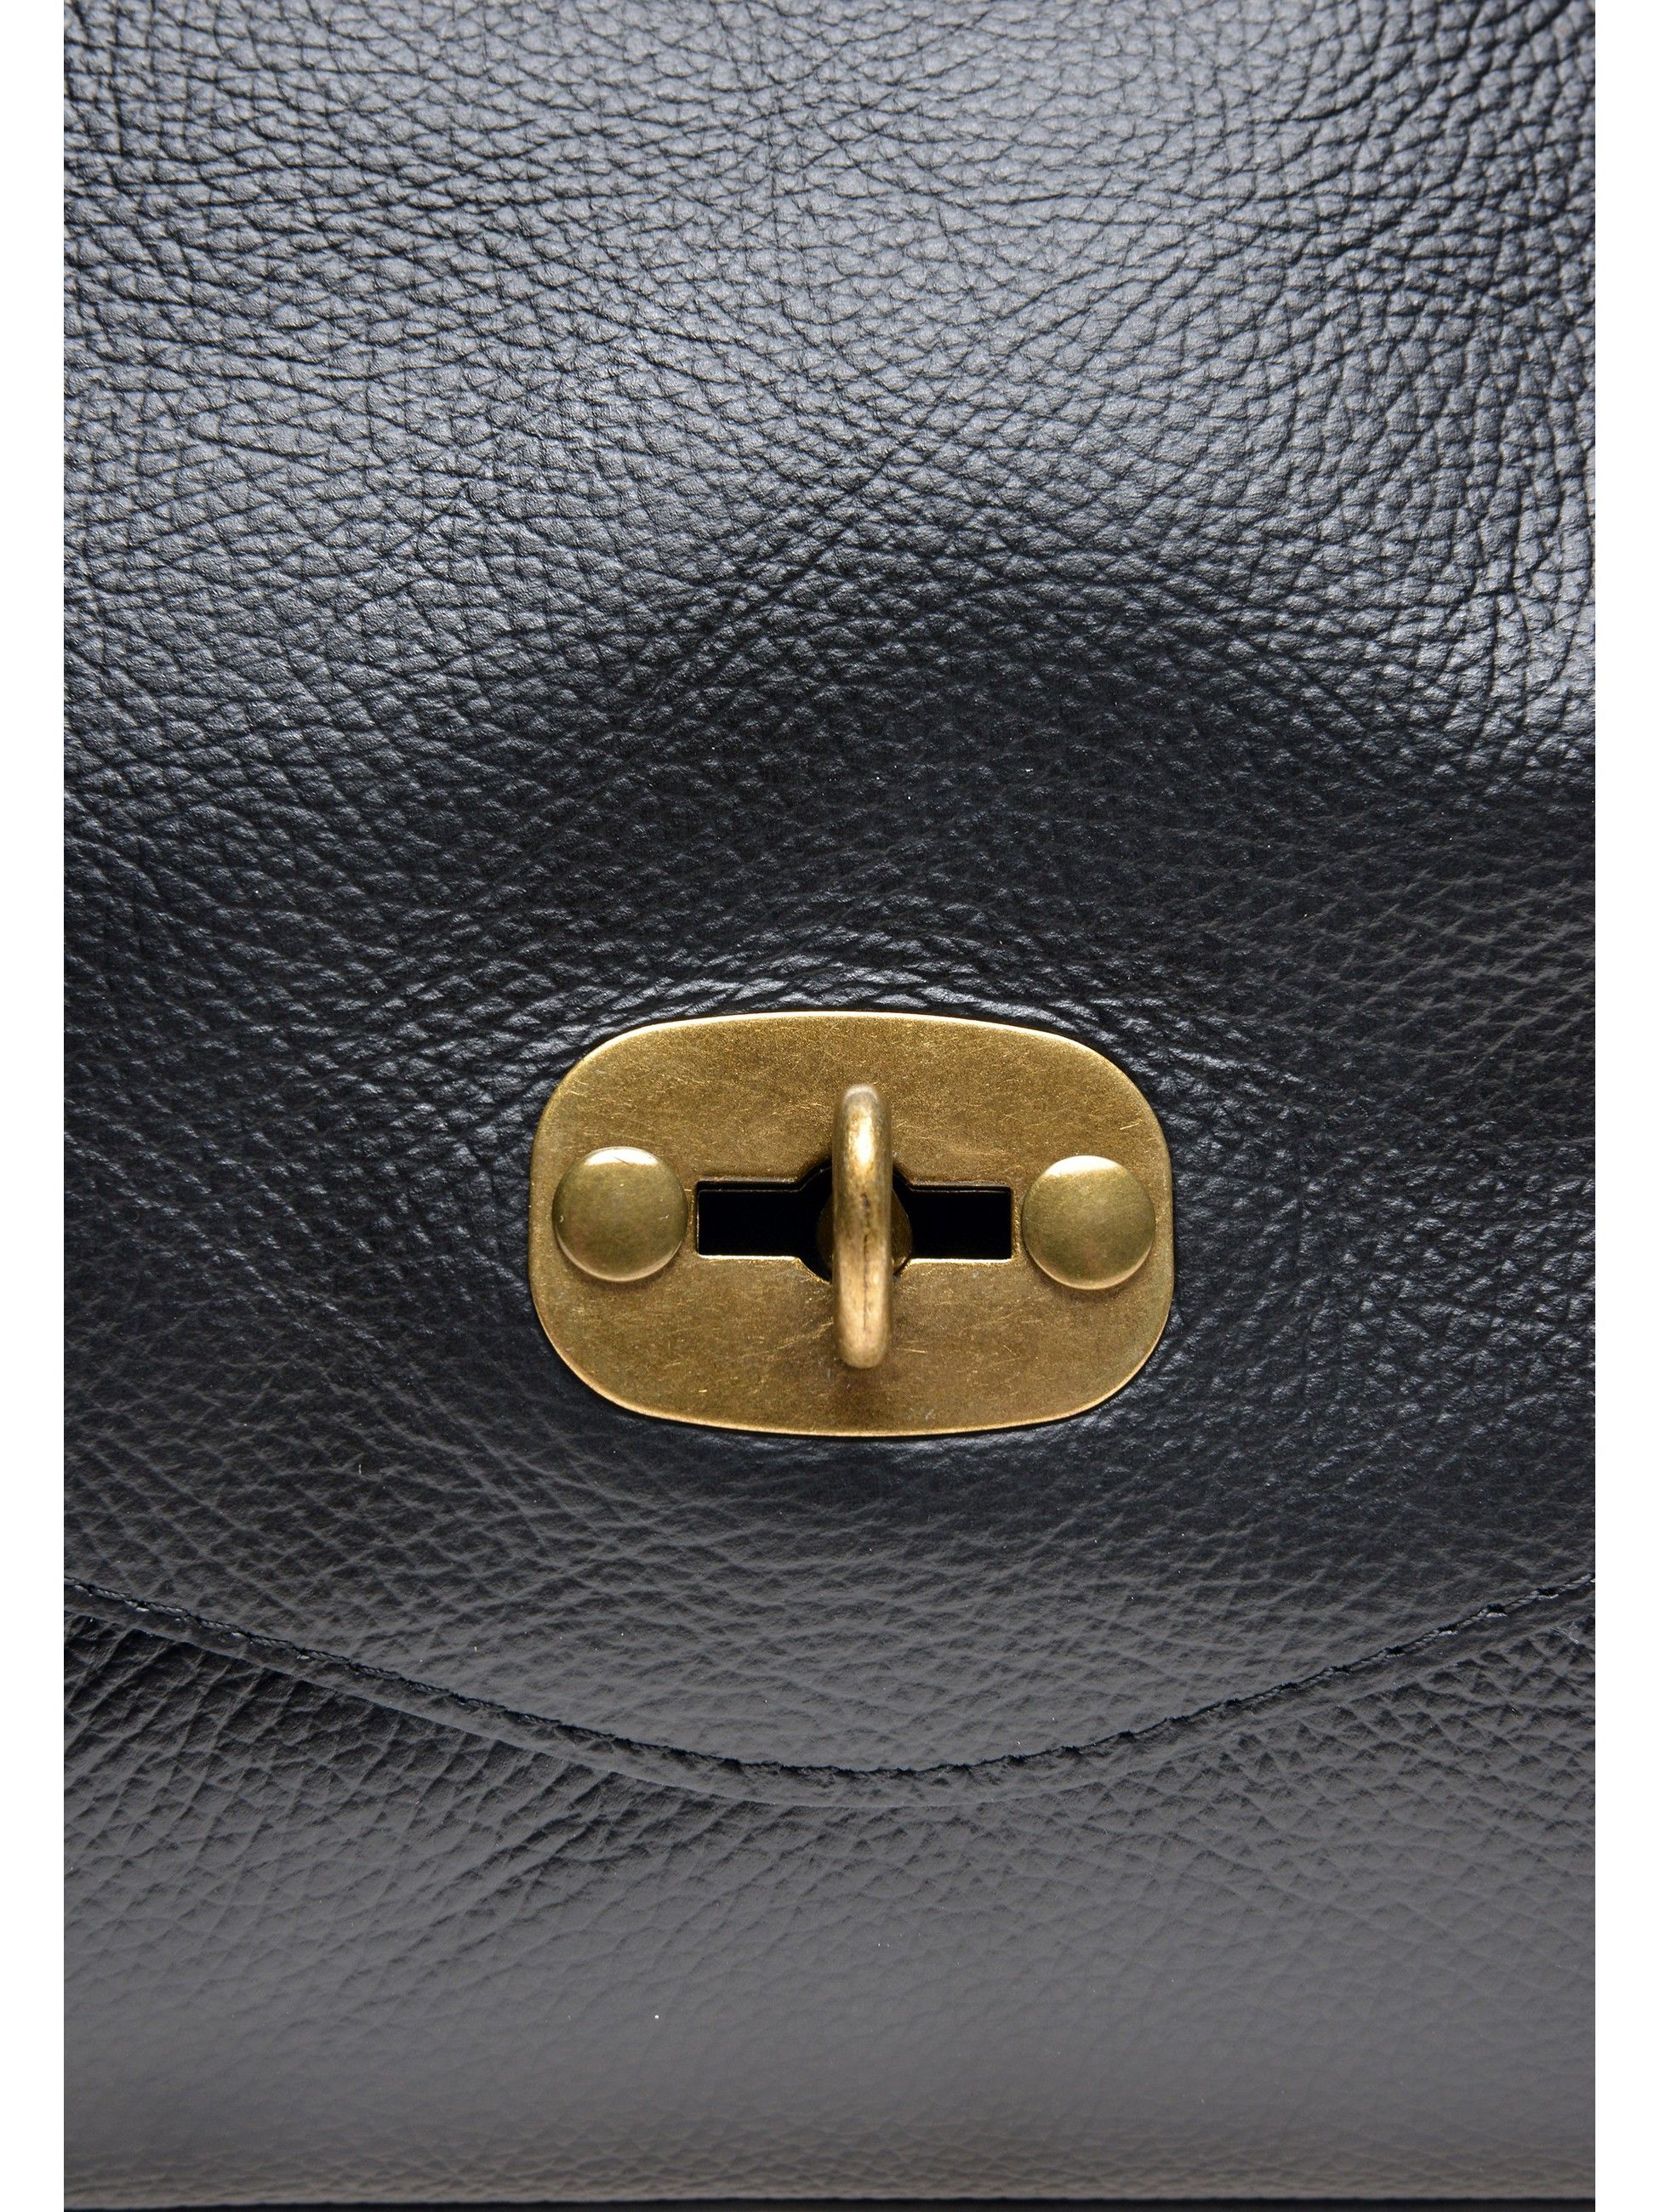 Top Handle Bag
100% cow leather
Magnet and buckle closure
Double compartment bag
Inner zip pockets
Dimensions (L): 26x35x11 cm
Handle: 46 cm
Shoulder strap: 120 cm adjustable